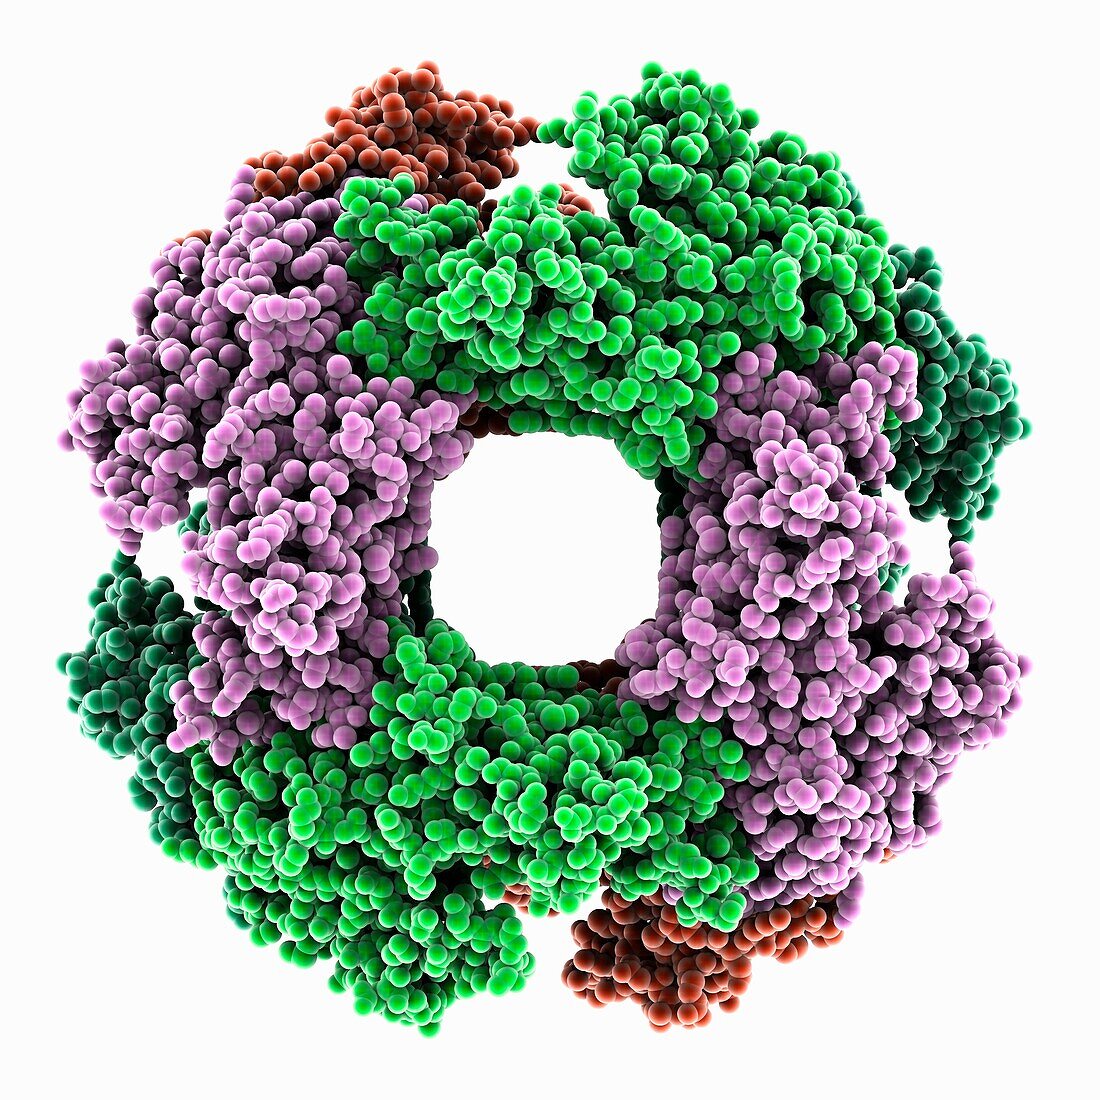 Rotavirus non-structural protein 2, molecular model